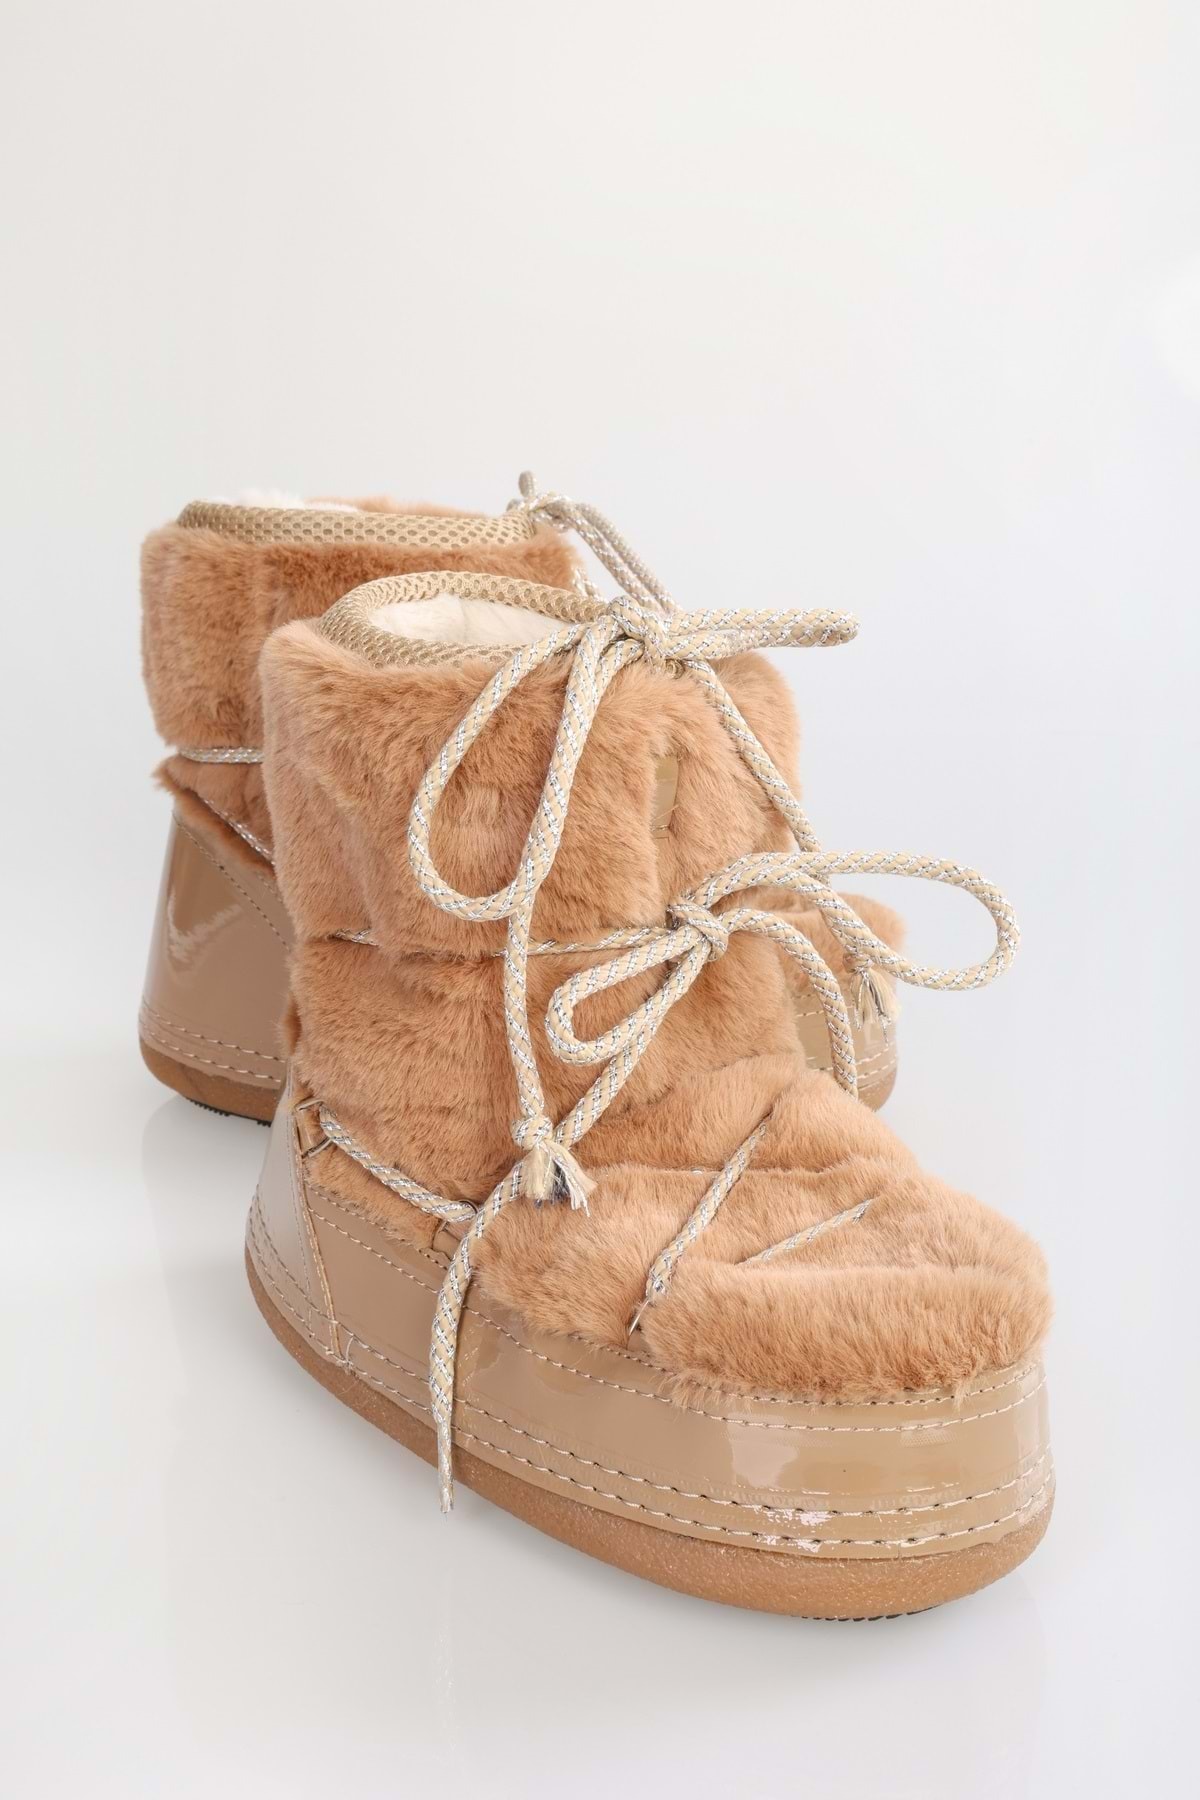 Shoeberry Women's Snowie Mink Hairy Thick Sole Snow Boots